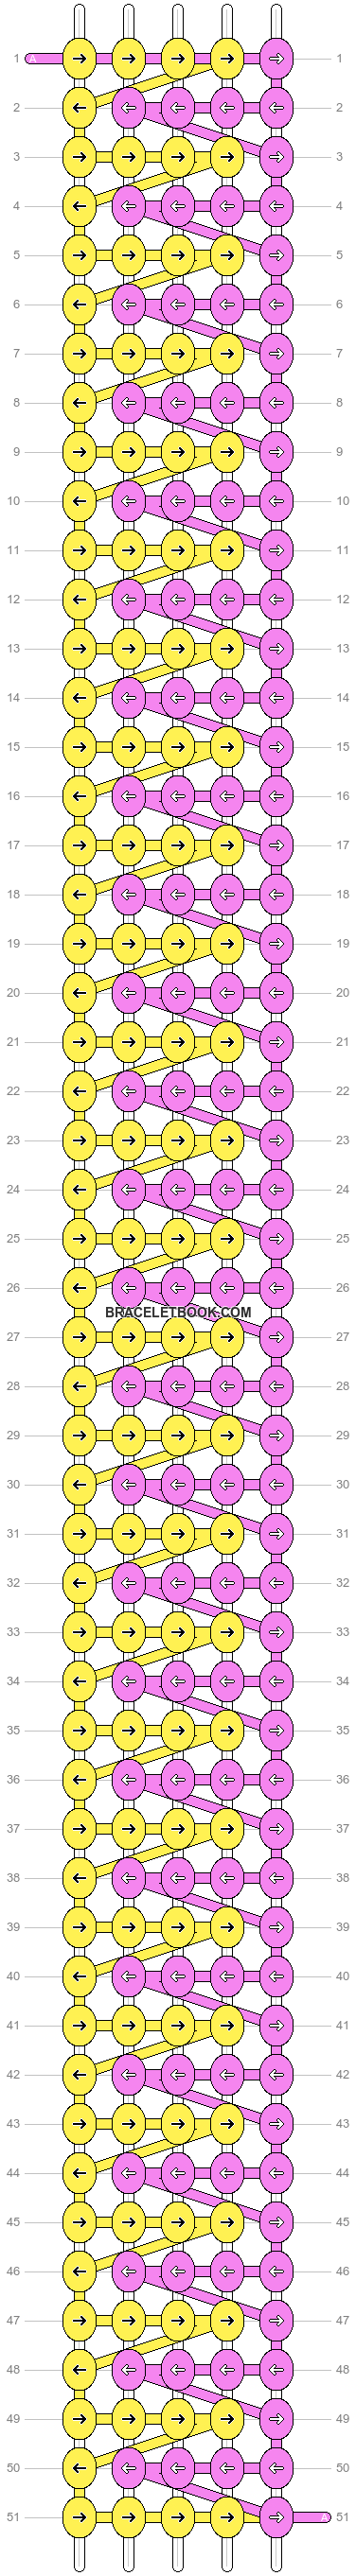 Alpha pattern #11523 variation #67105 pattern